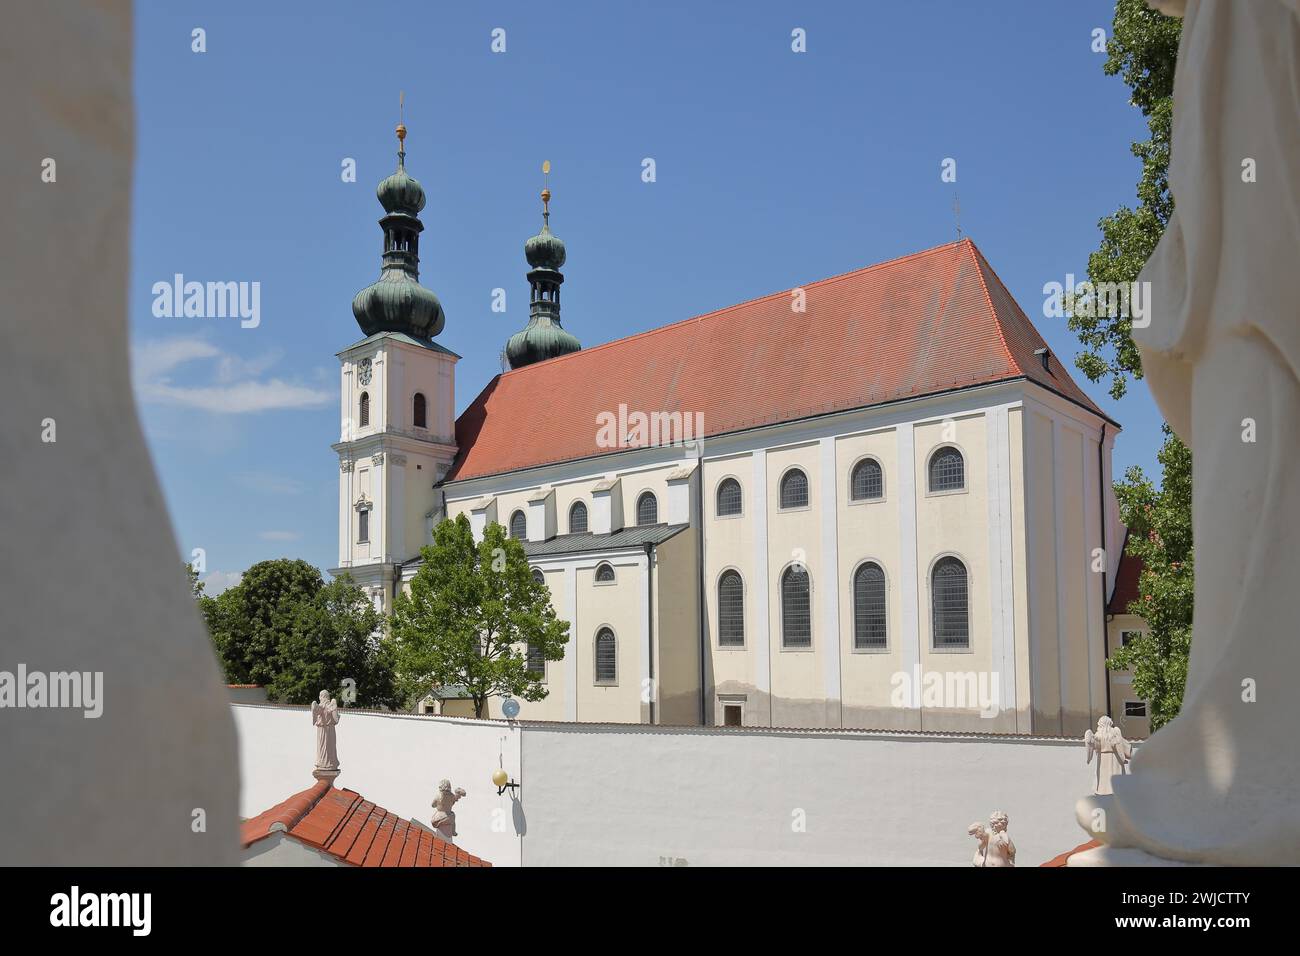 Baroque basilica in Frauenkirchen, Seewinkel, Lake Neusiedl, Burgenland, Austria Stock Photo